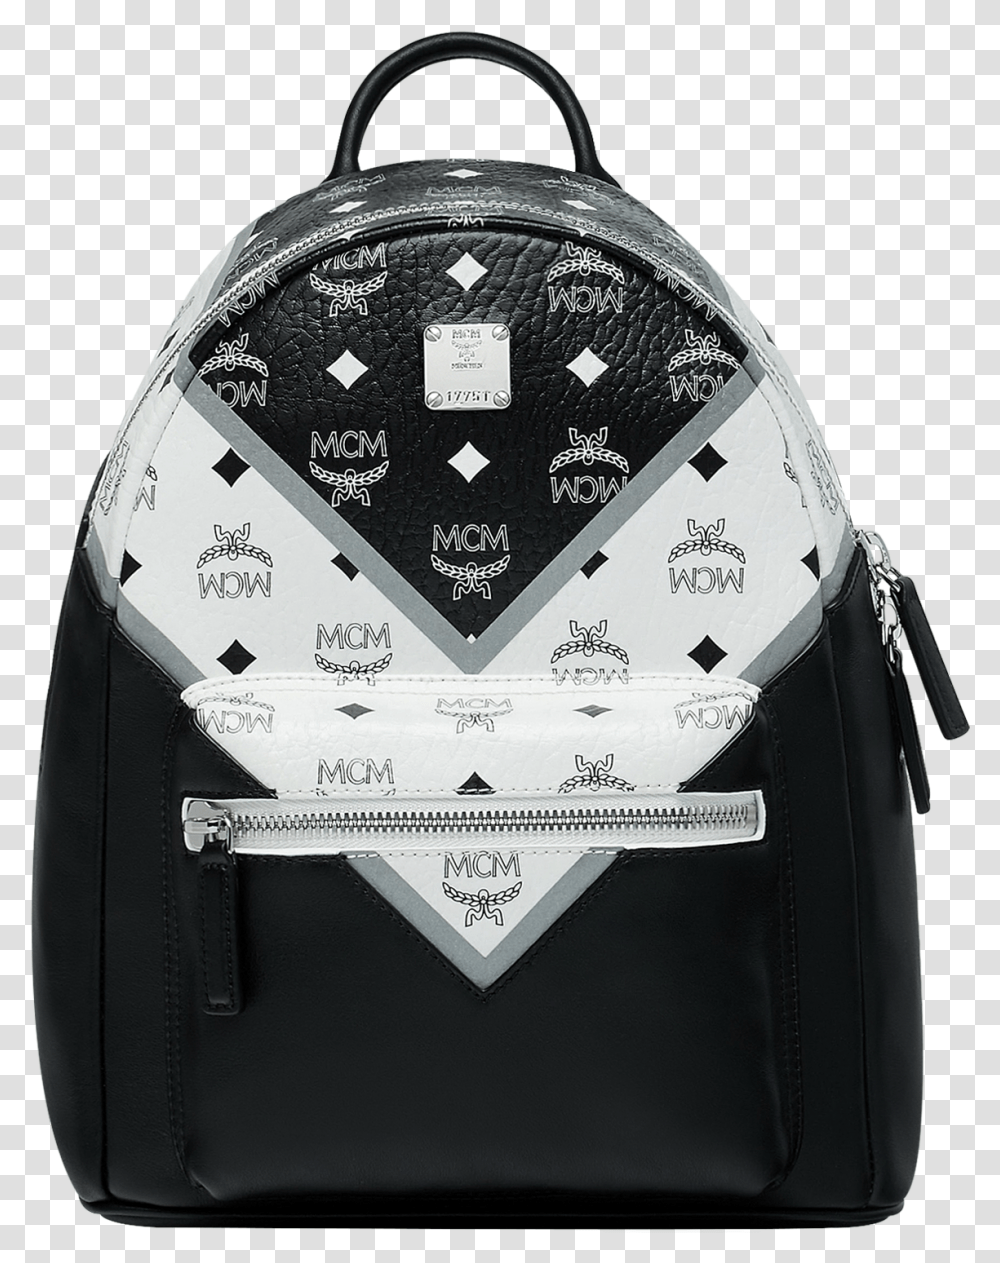 Mcm Backpack Black And White, Helmet, Apparel Transparent Png